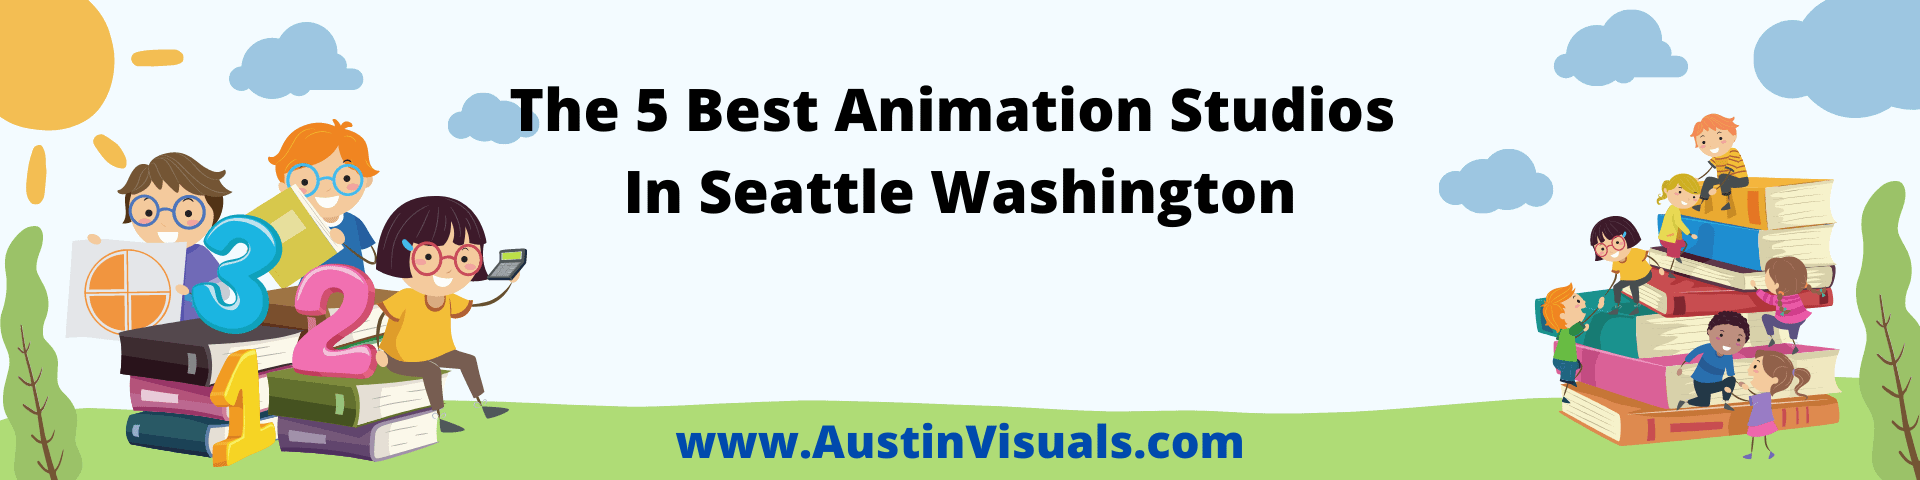 The-5-Best-Animation-Studios-In-Seattle-Washington-1